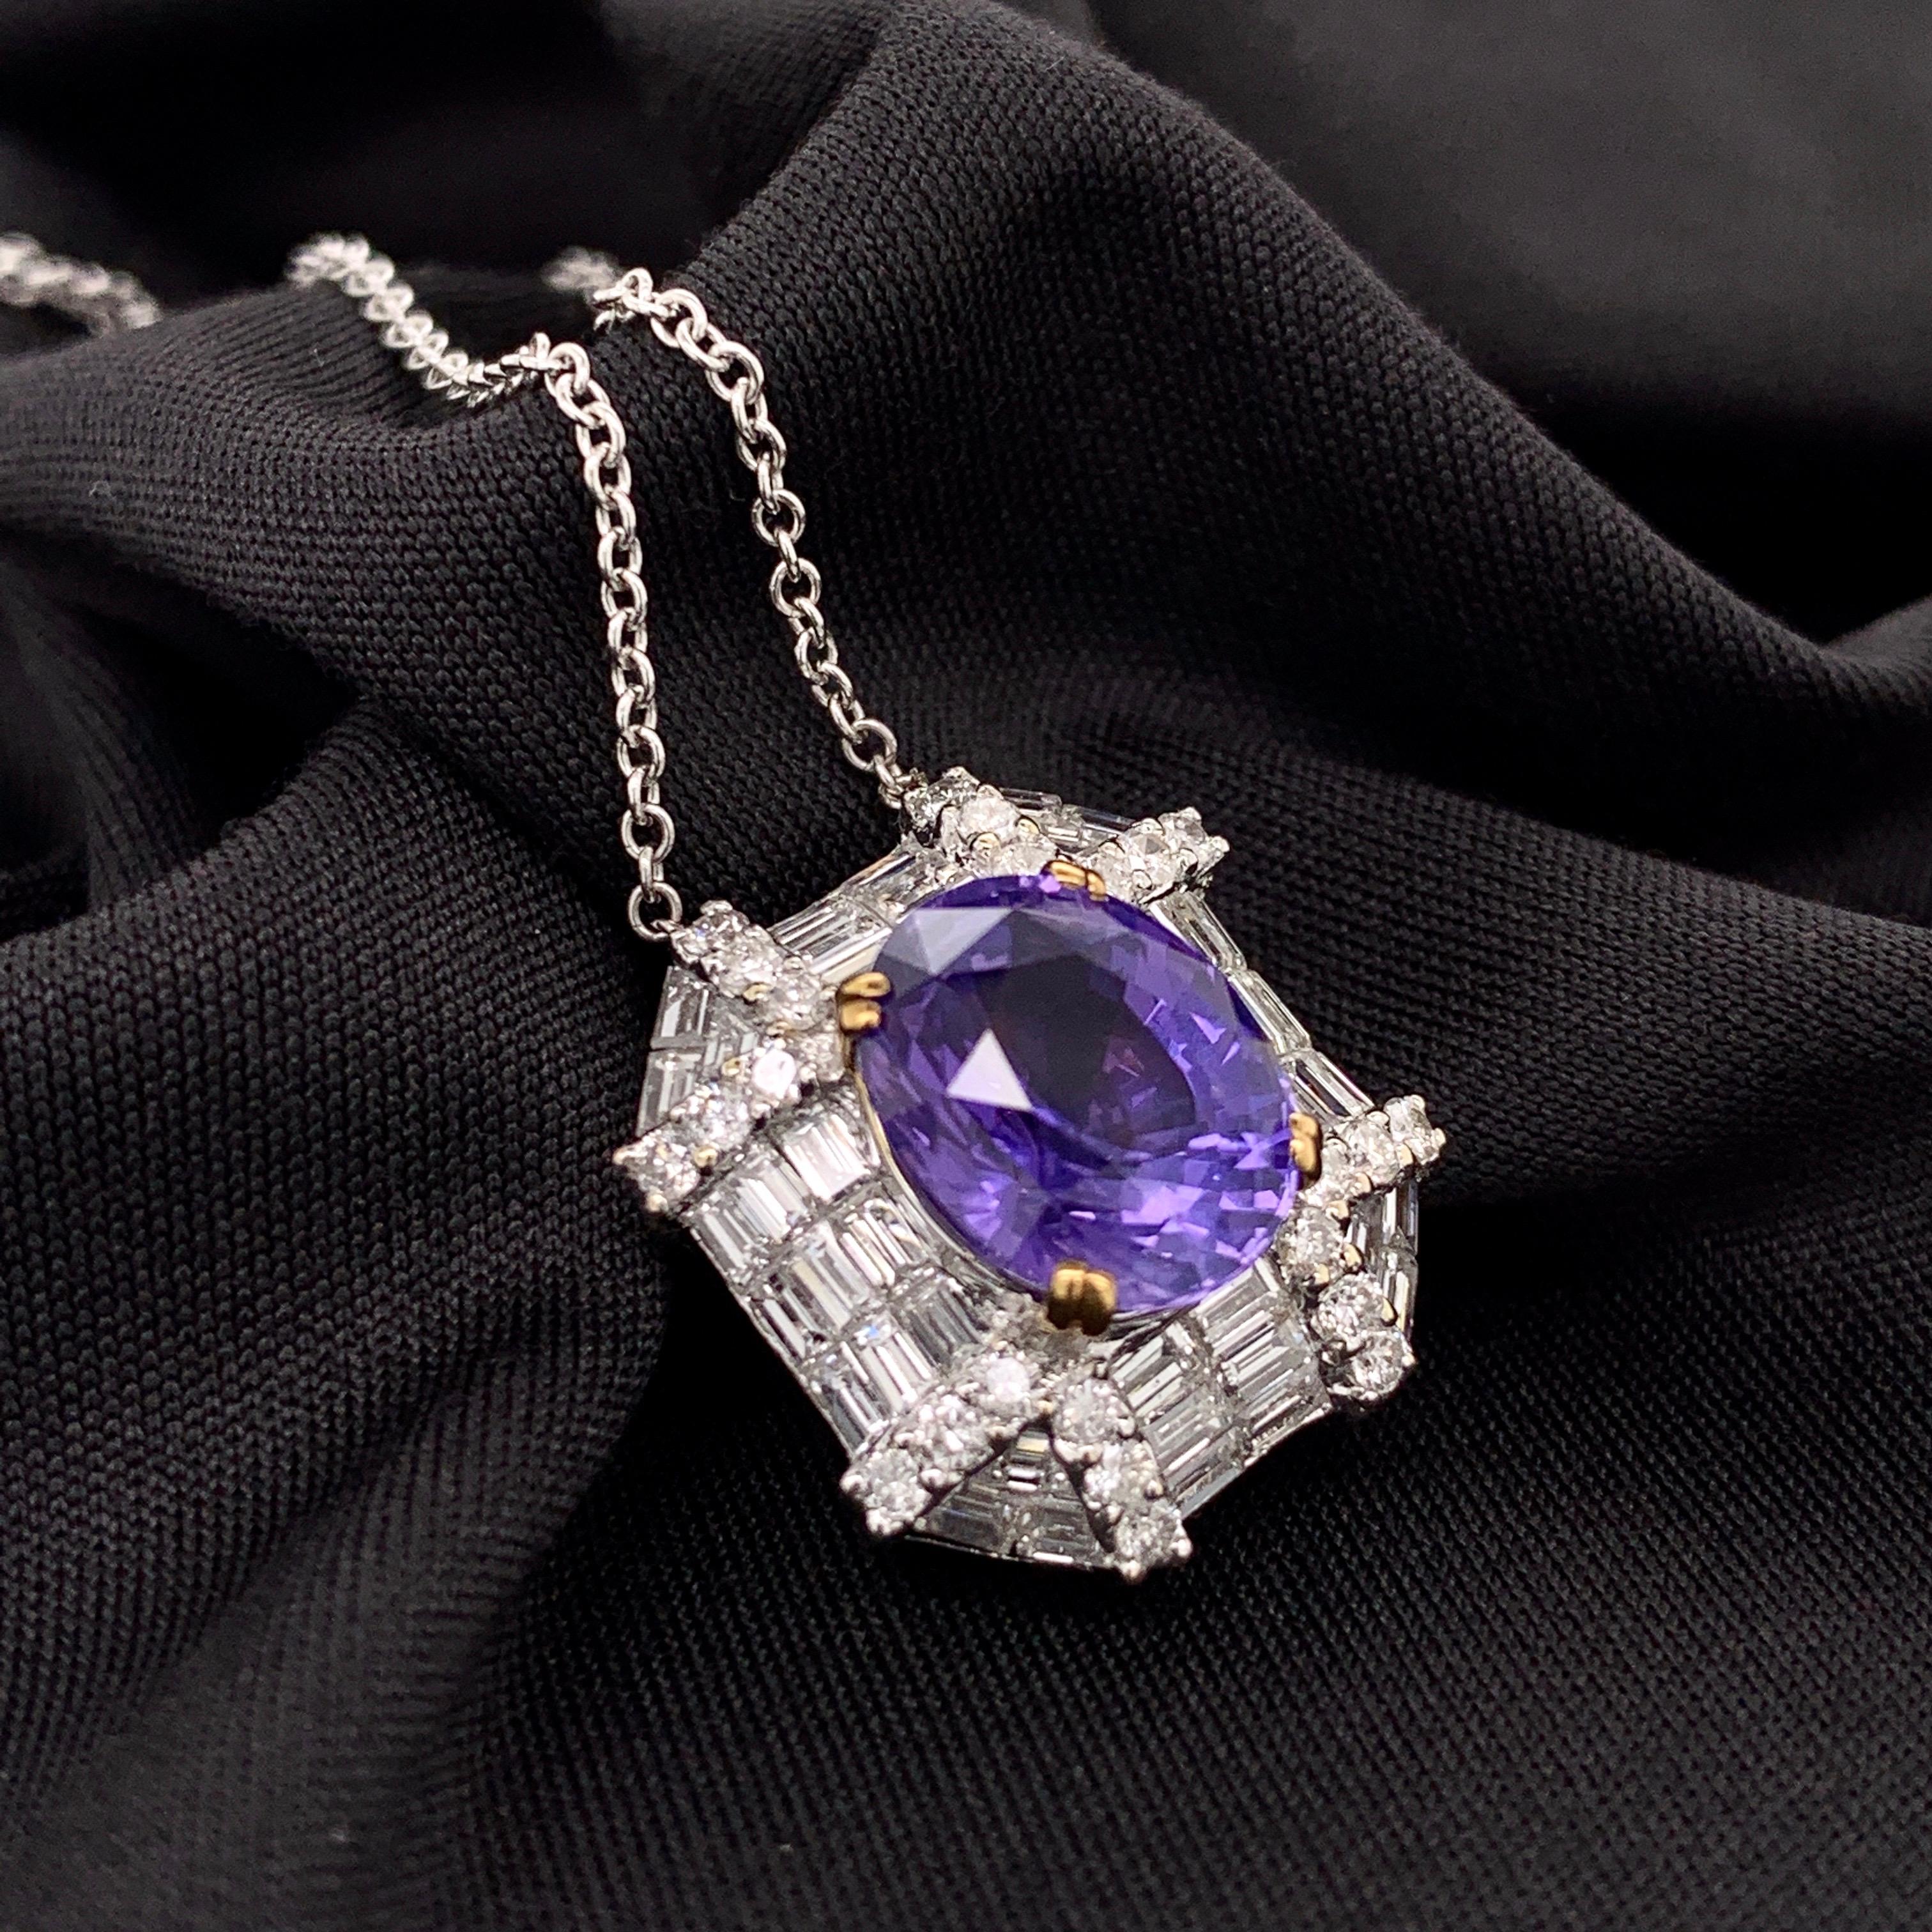 Women's or Men's GIA 3.83 Carat Unheated Violet-Purple Sapphire Pendant Necklace